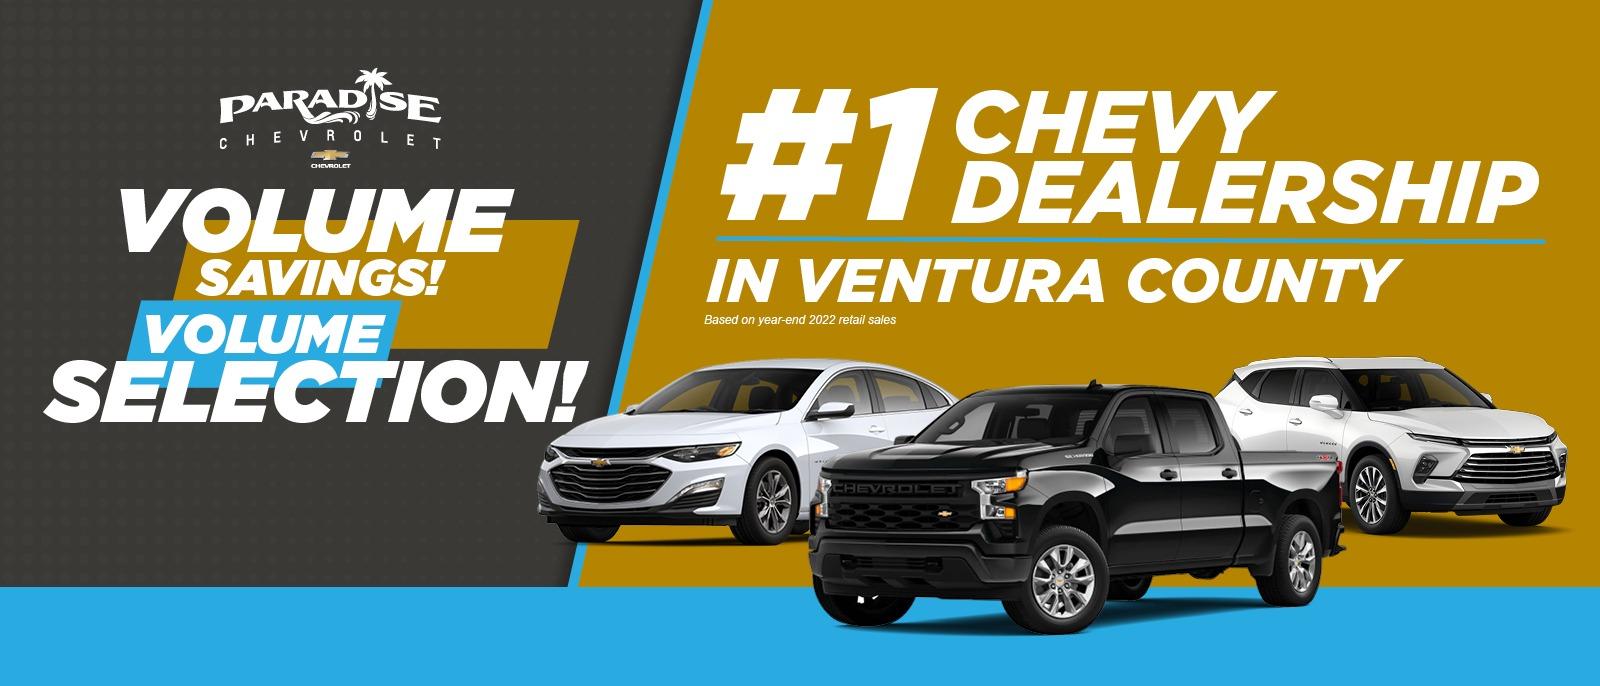 #1 Chevy Dealership in Ventura County